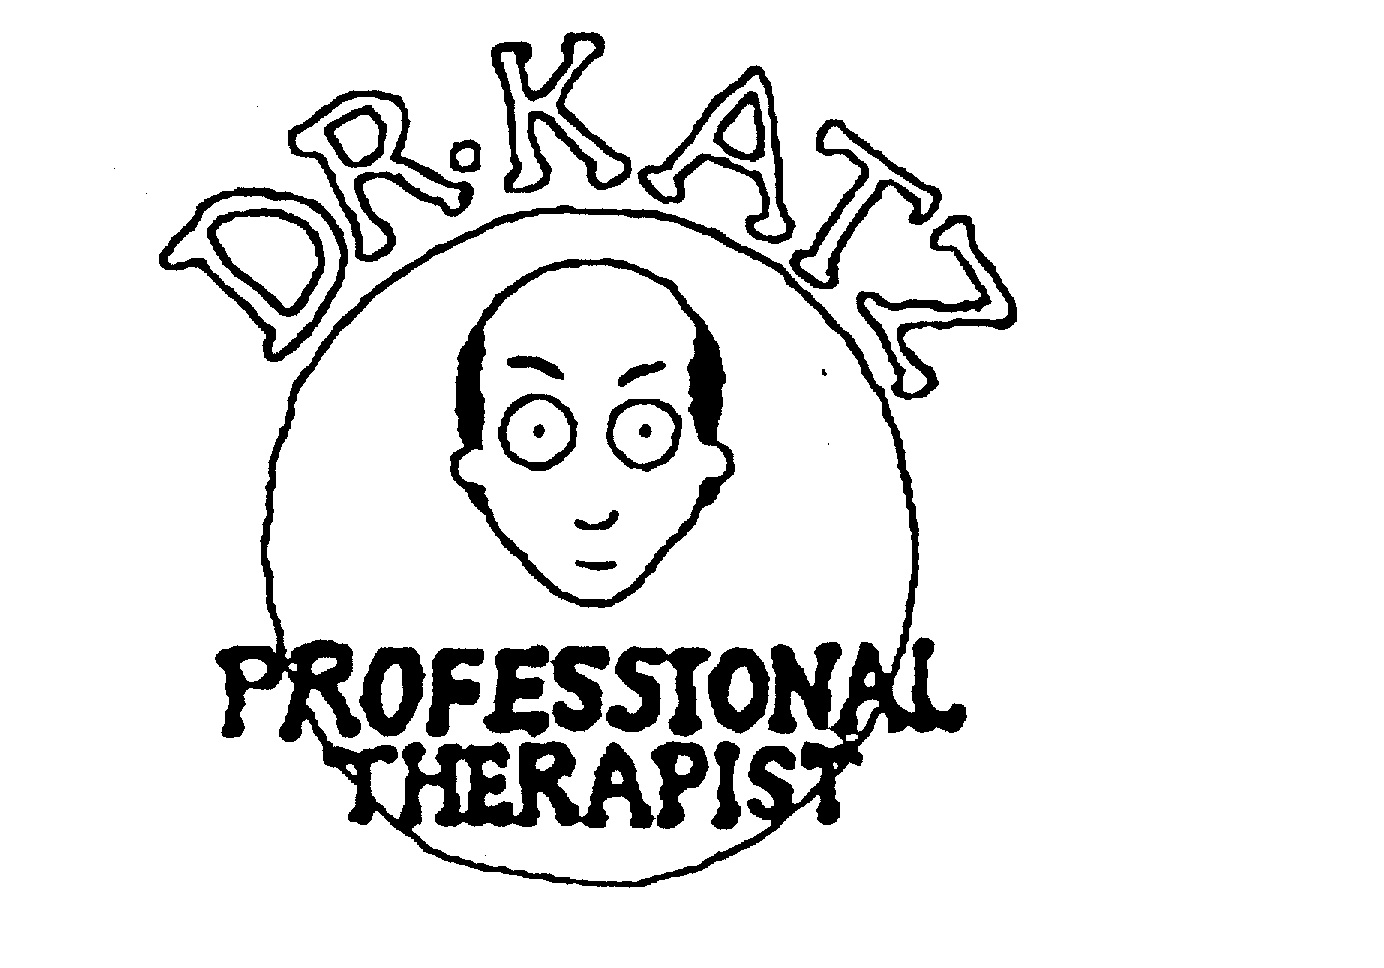  DR. KATZ PROFESSIONAL THERAPIST